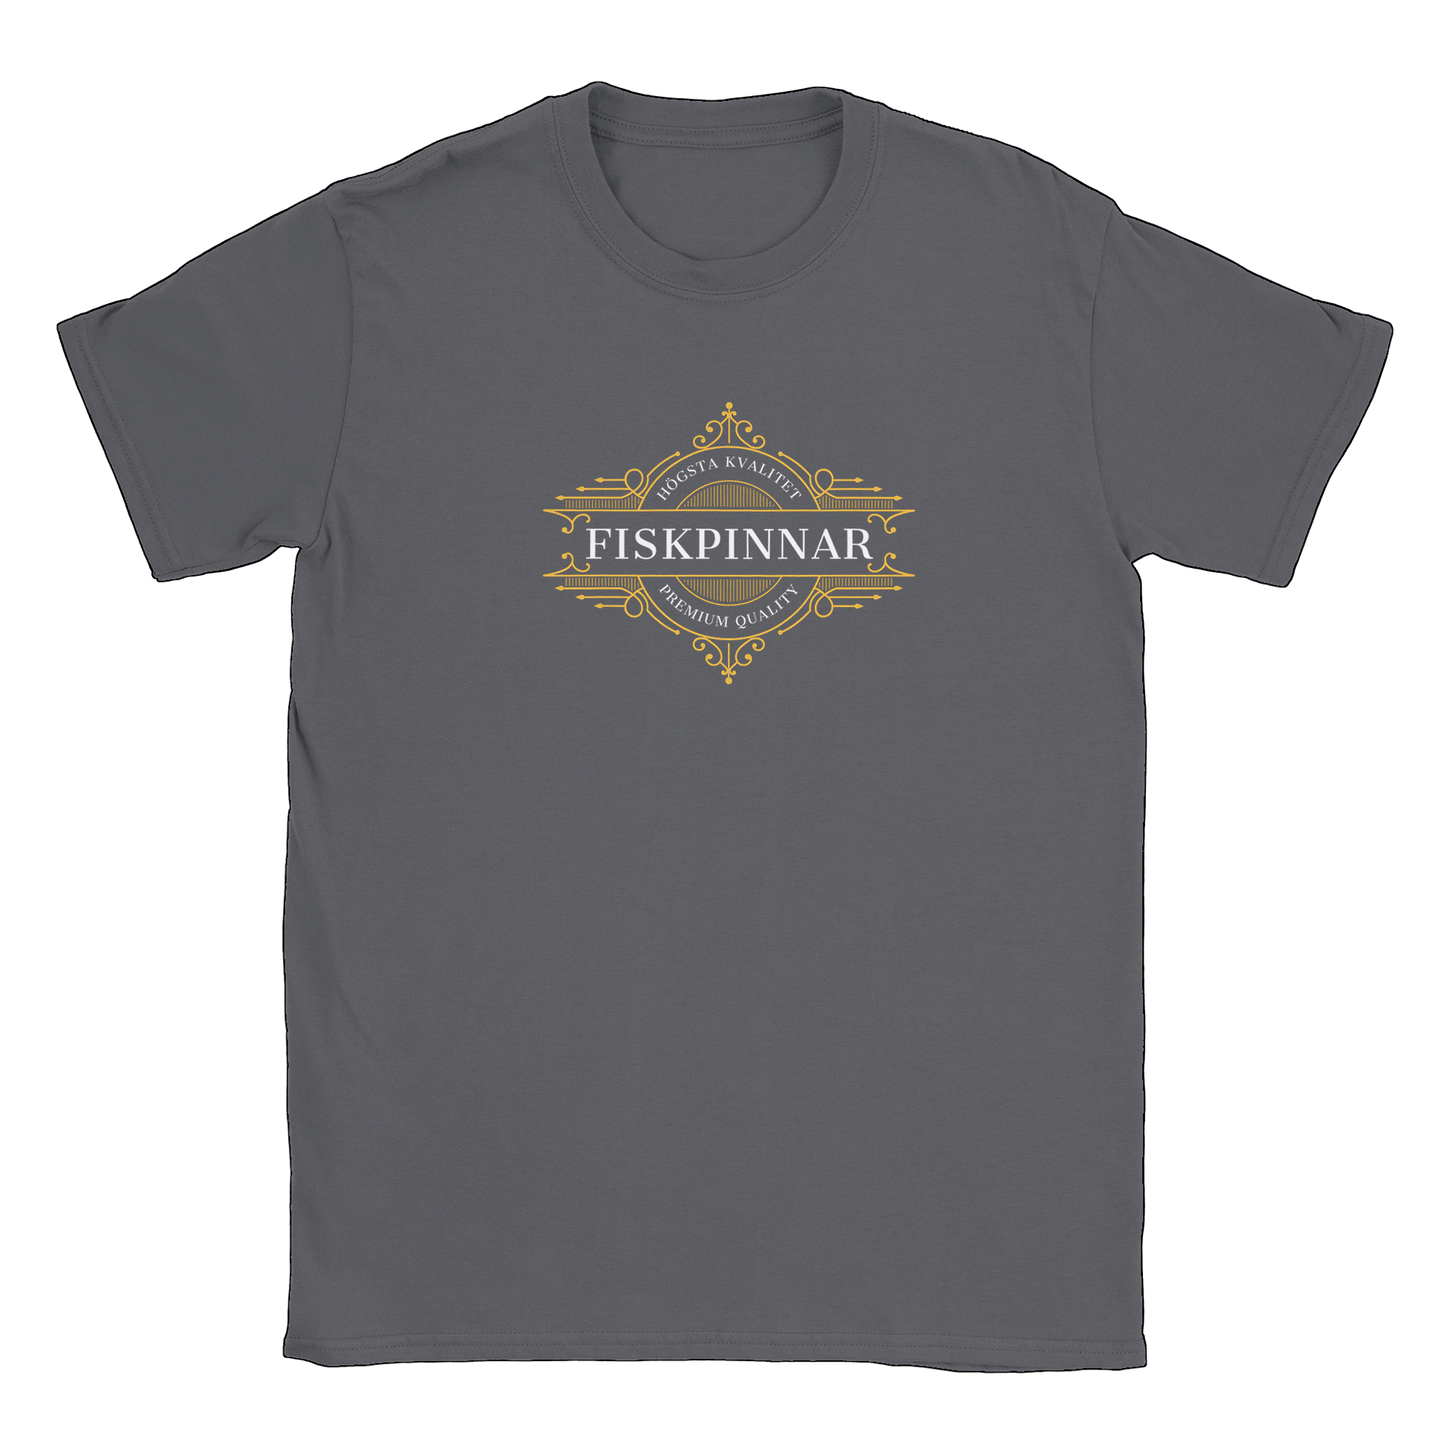 Fiskpinnar - T-shirt Charcoal